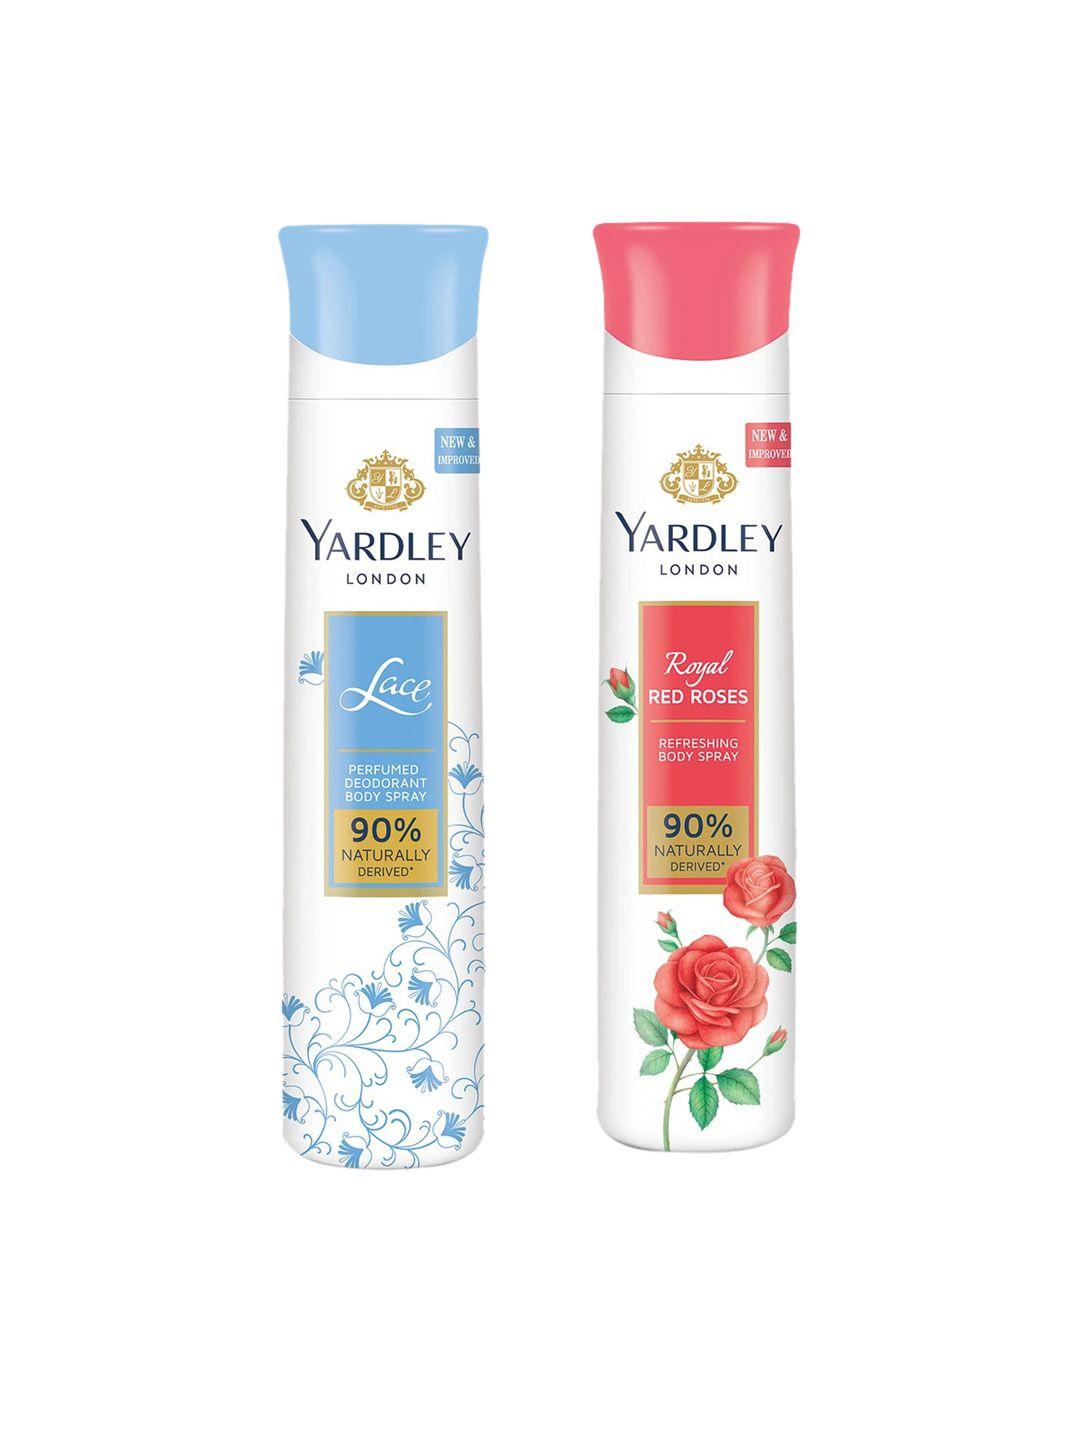 yardley london set of 2 perfumed deodorant body spray lace & royal red rose - 150 ml each